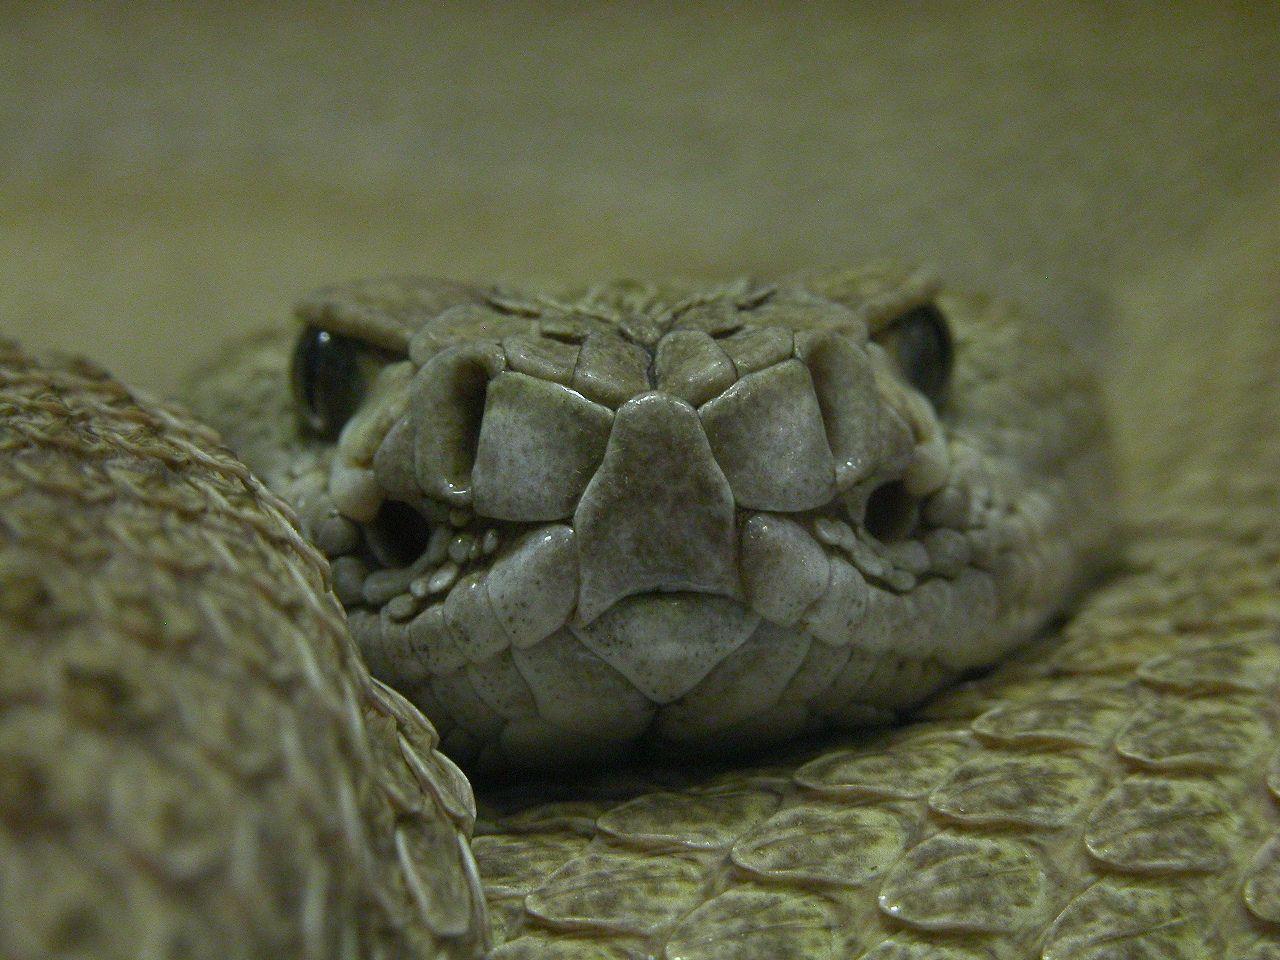 snakes rattlesnakes 1280x960 wallpaper High Quality Wallpaper, High